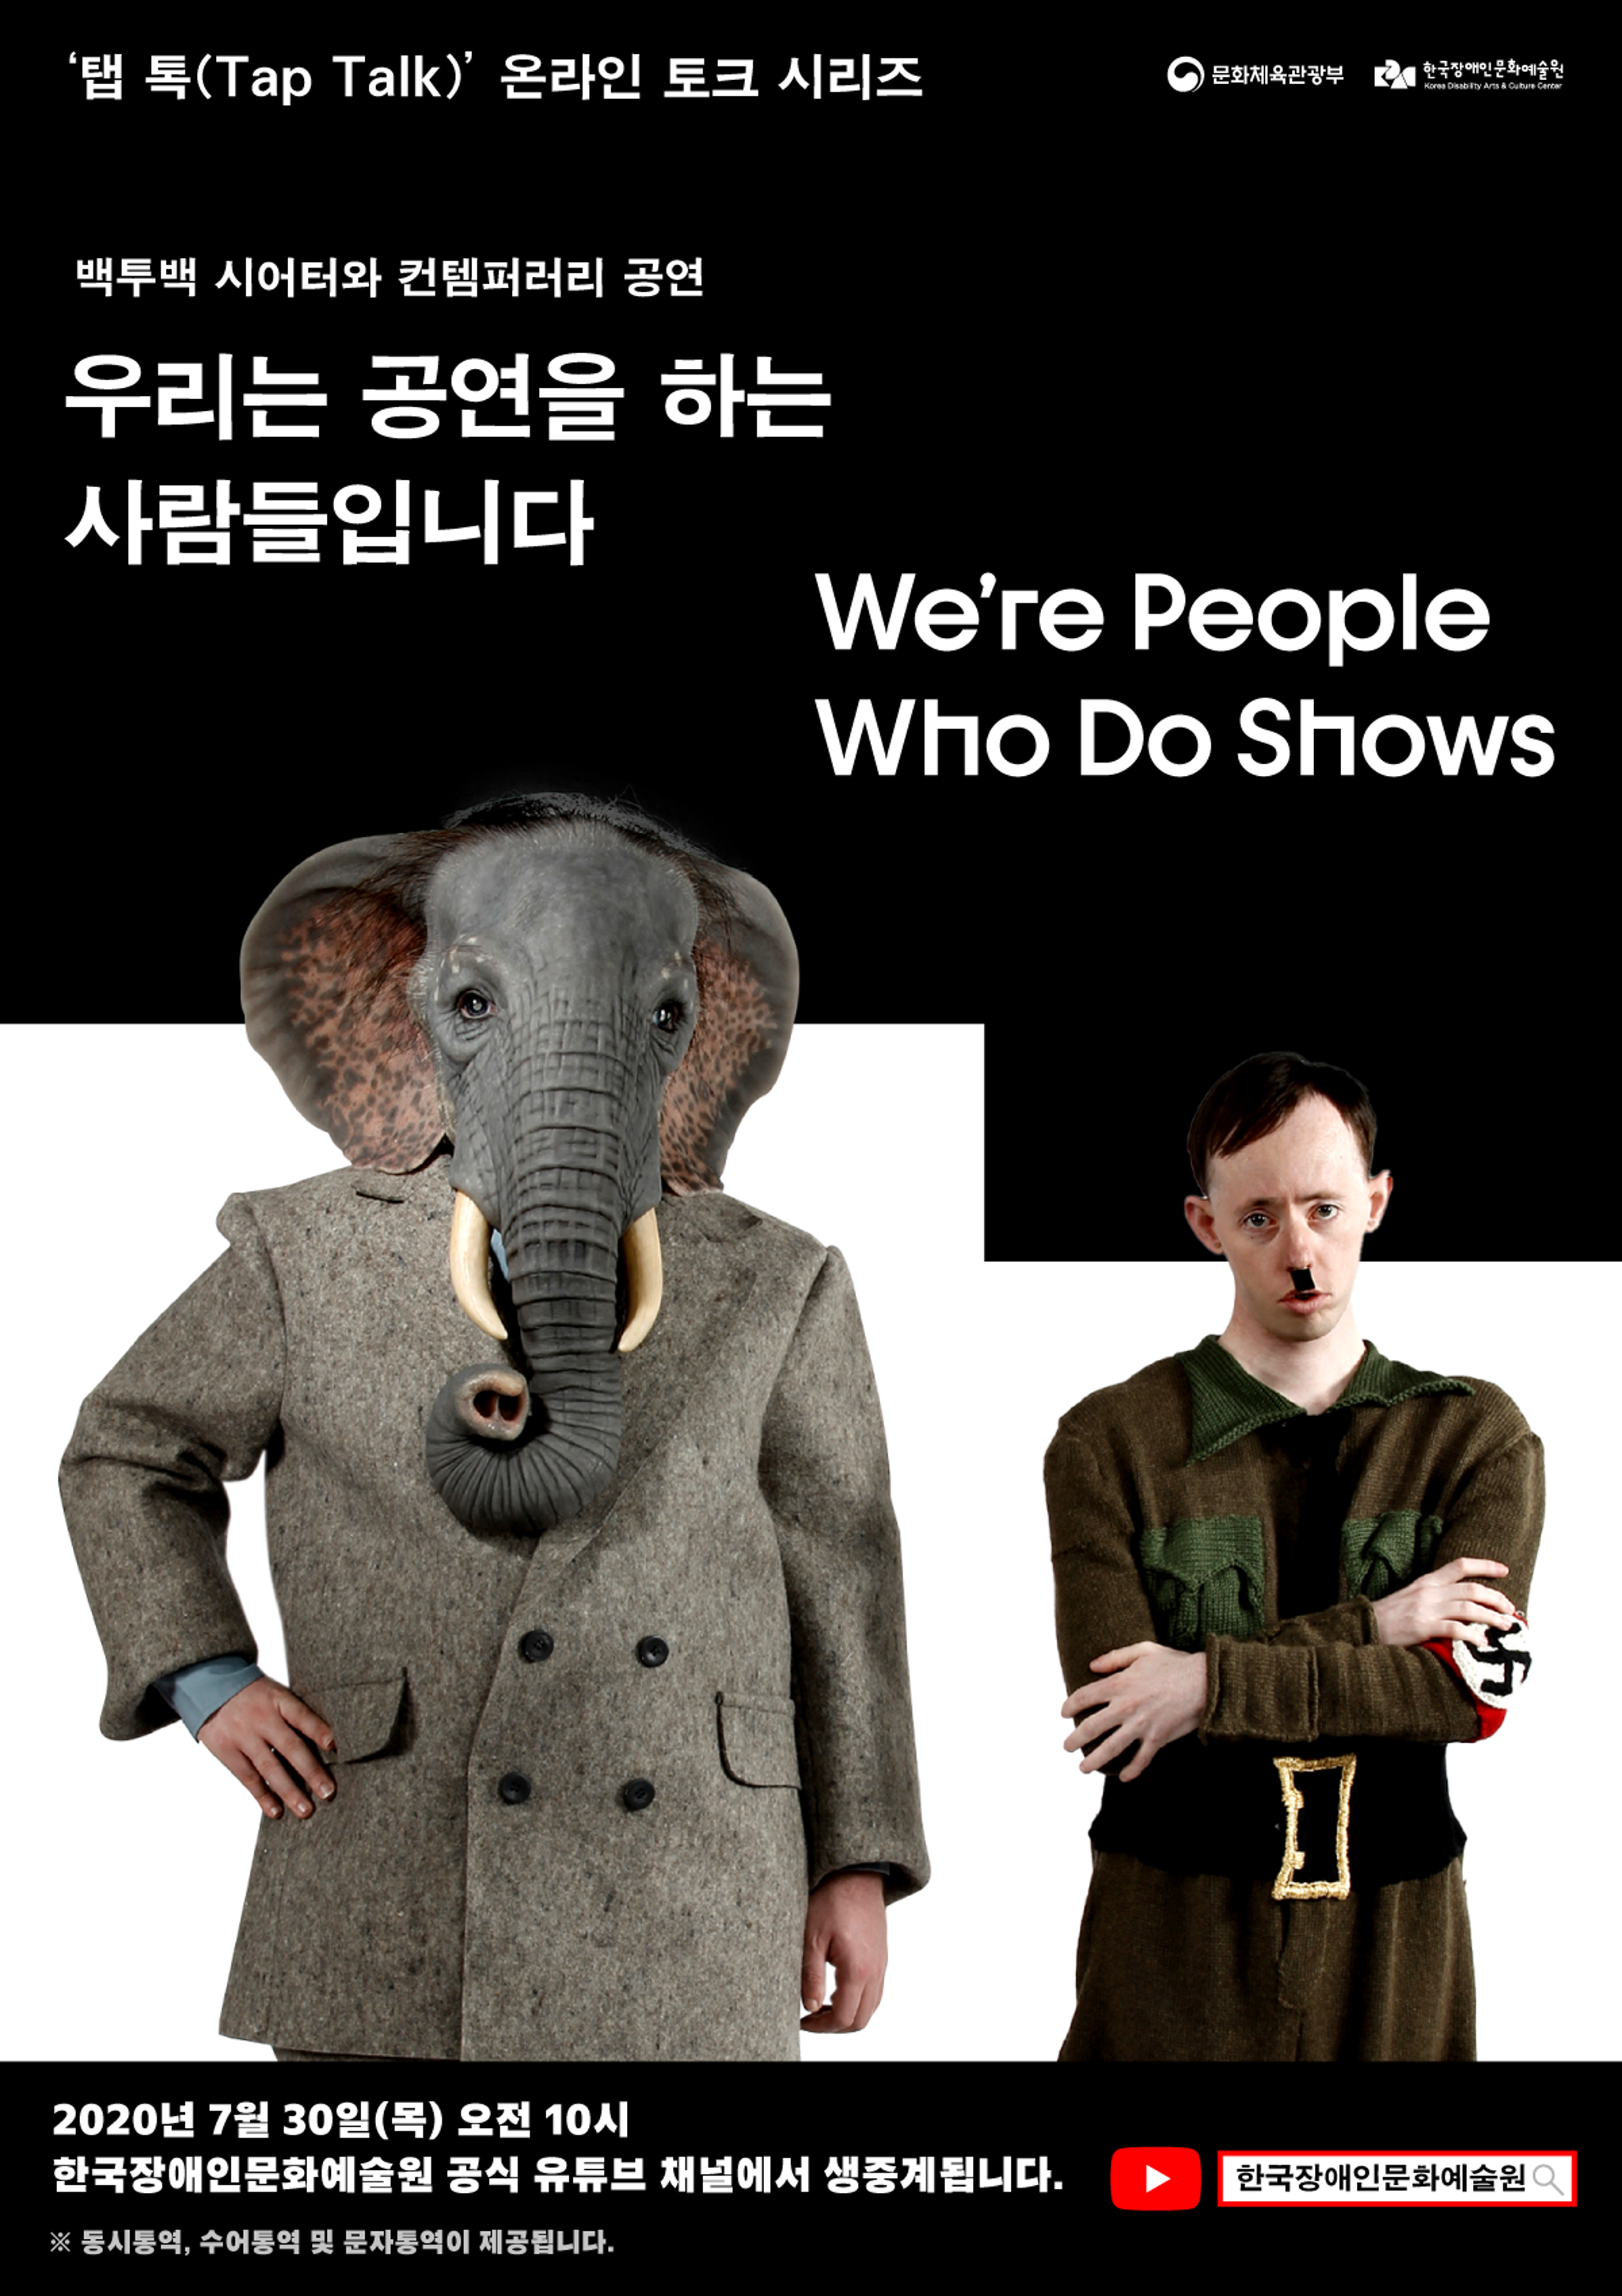 <p>'탭 톡(Tap Talk)' 온라인 토크 시리즈</p>
	<p>문화체육관광부, 한국장애인문화예술원</p>
	<p>백투백 시어터와 컨템퍼러리 공연</p>
	<p>우리는 공연을 하는 사람들입니다</p>
	<p>We're People Who Do Shows</p>
	<p>2020년 7월 30일(목) 오전 10시</p>
	<p>한국장애인문화예술원 공식 유튜부 채널에서 생중계됩니다.</p>
	<p>※ 동시통역, 수어통역 및 문자통역이 제공됩니다.</p>